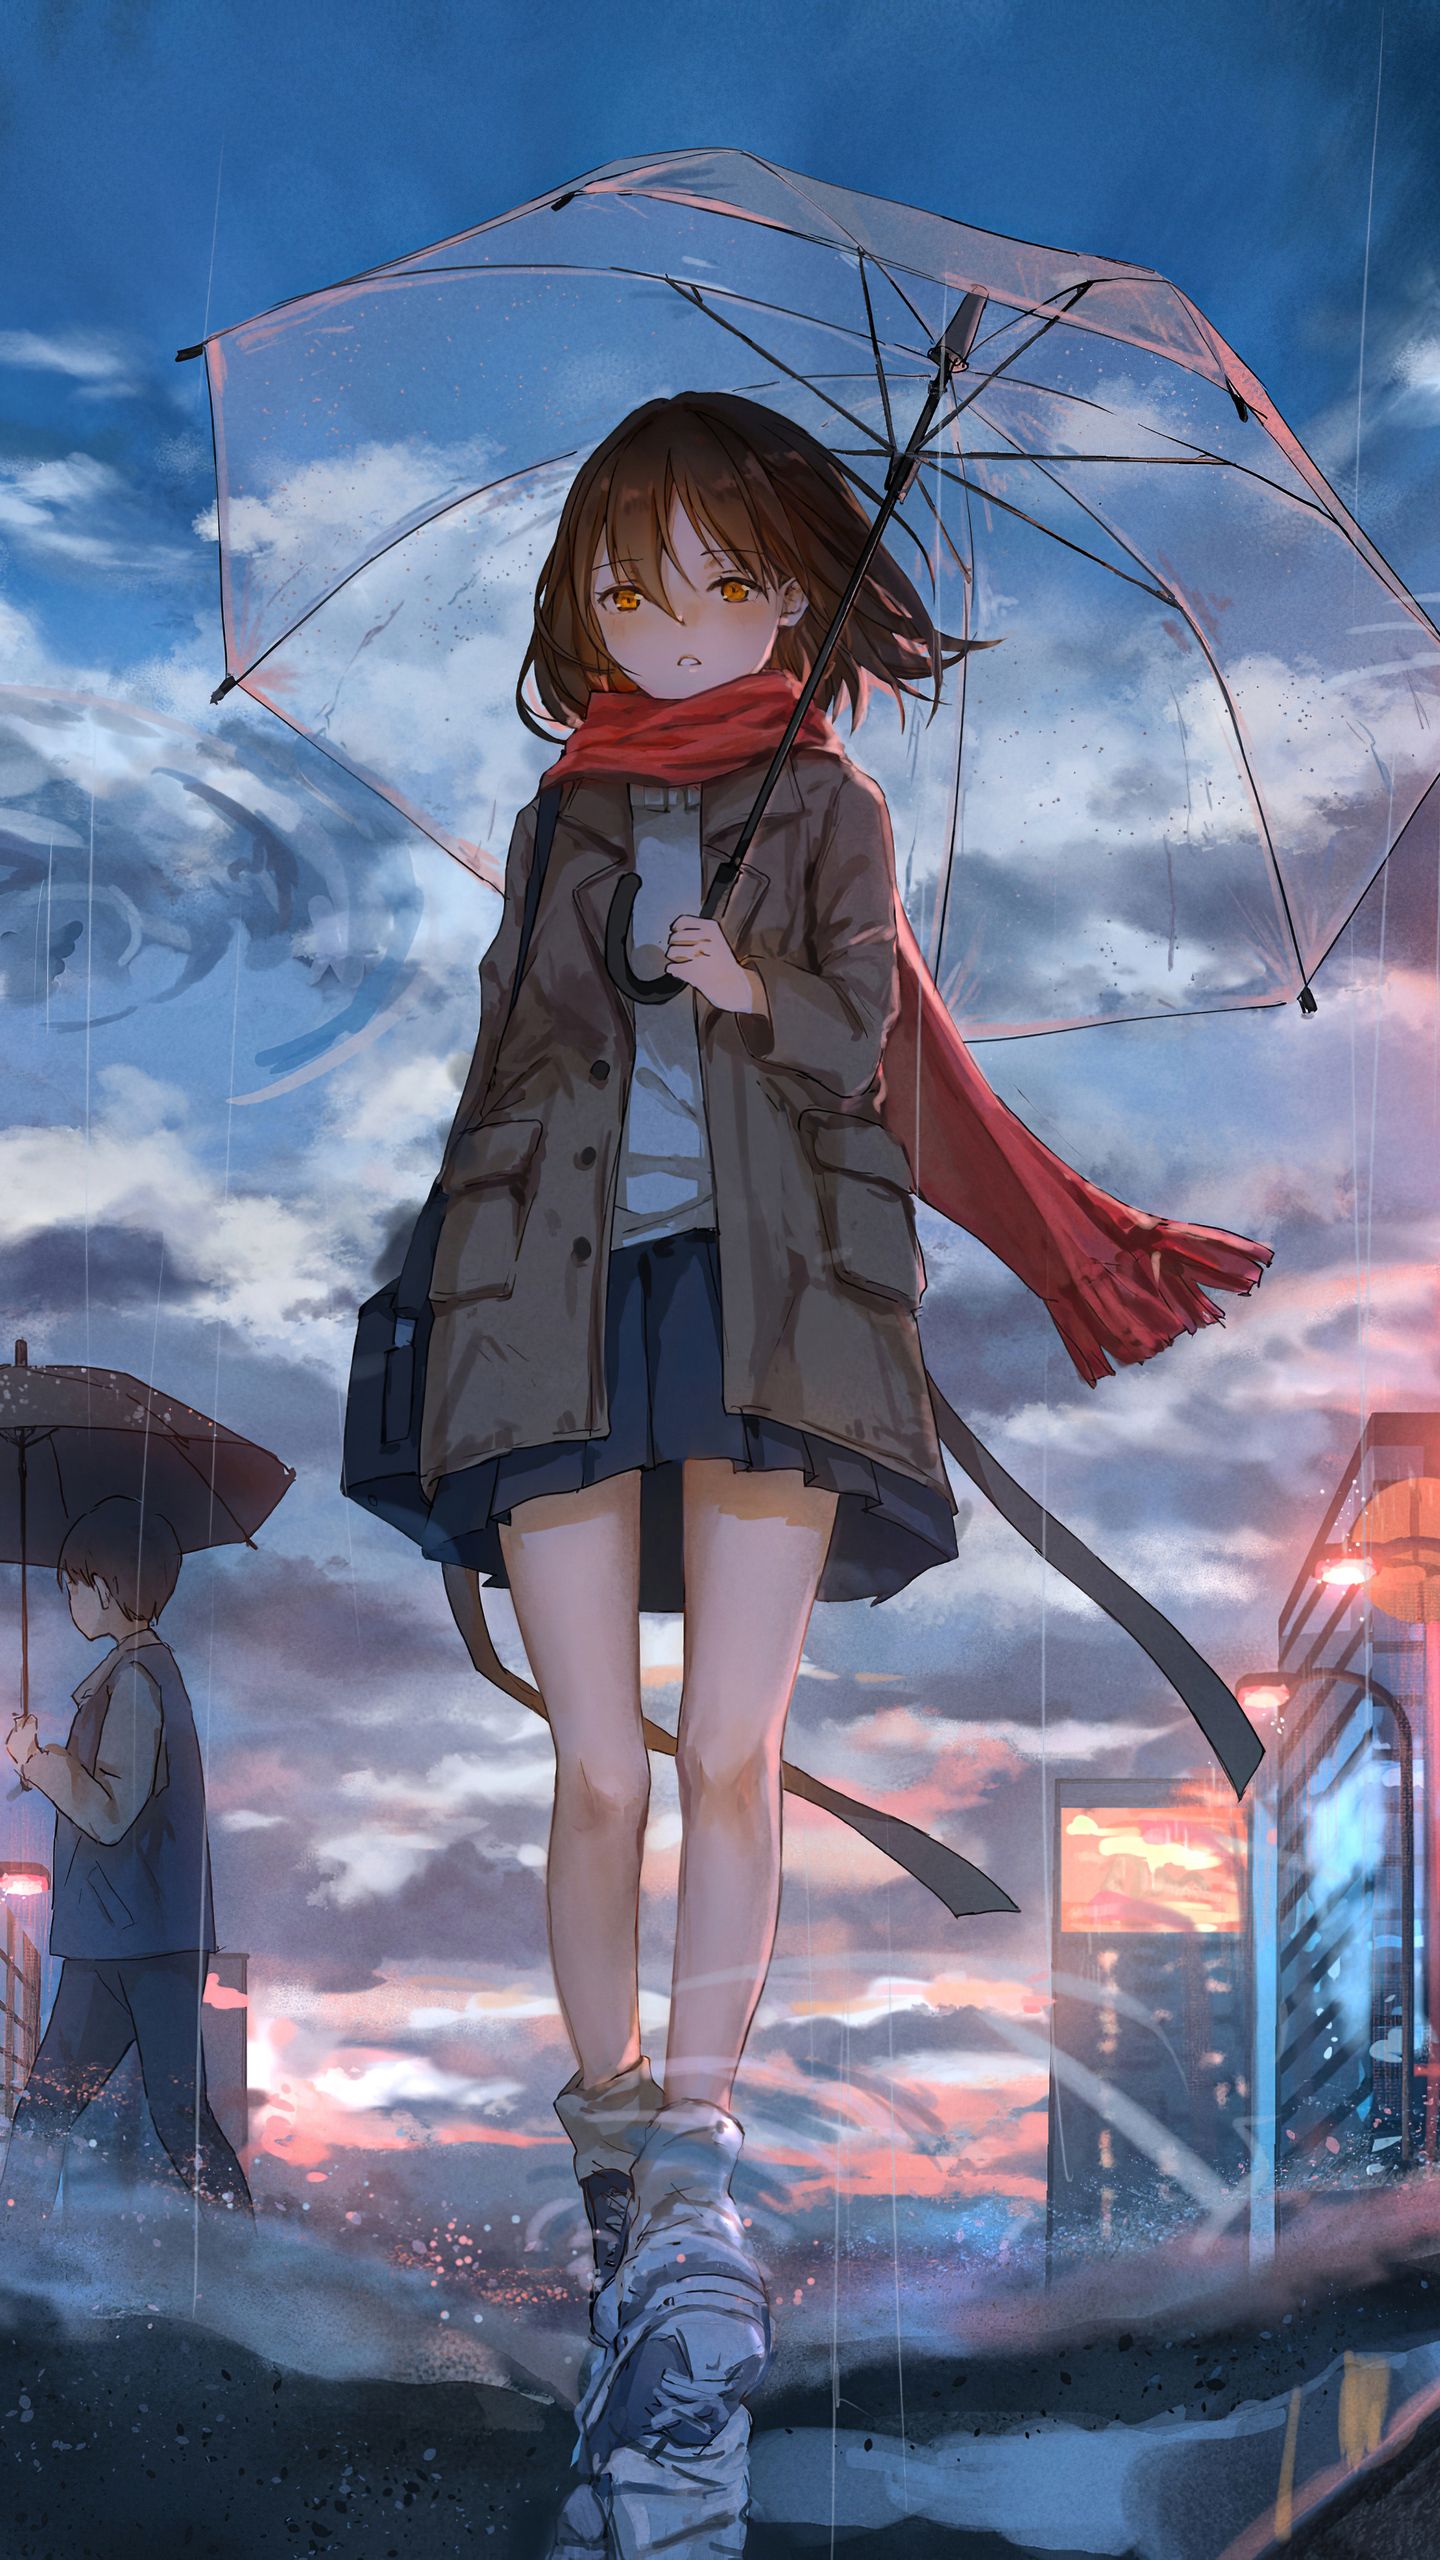 Anime Girl Walking In Rain With Umbrella 4k Samsung